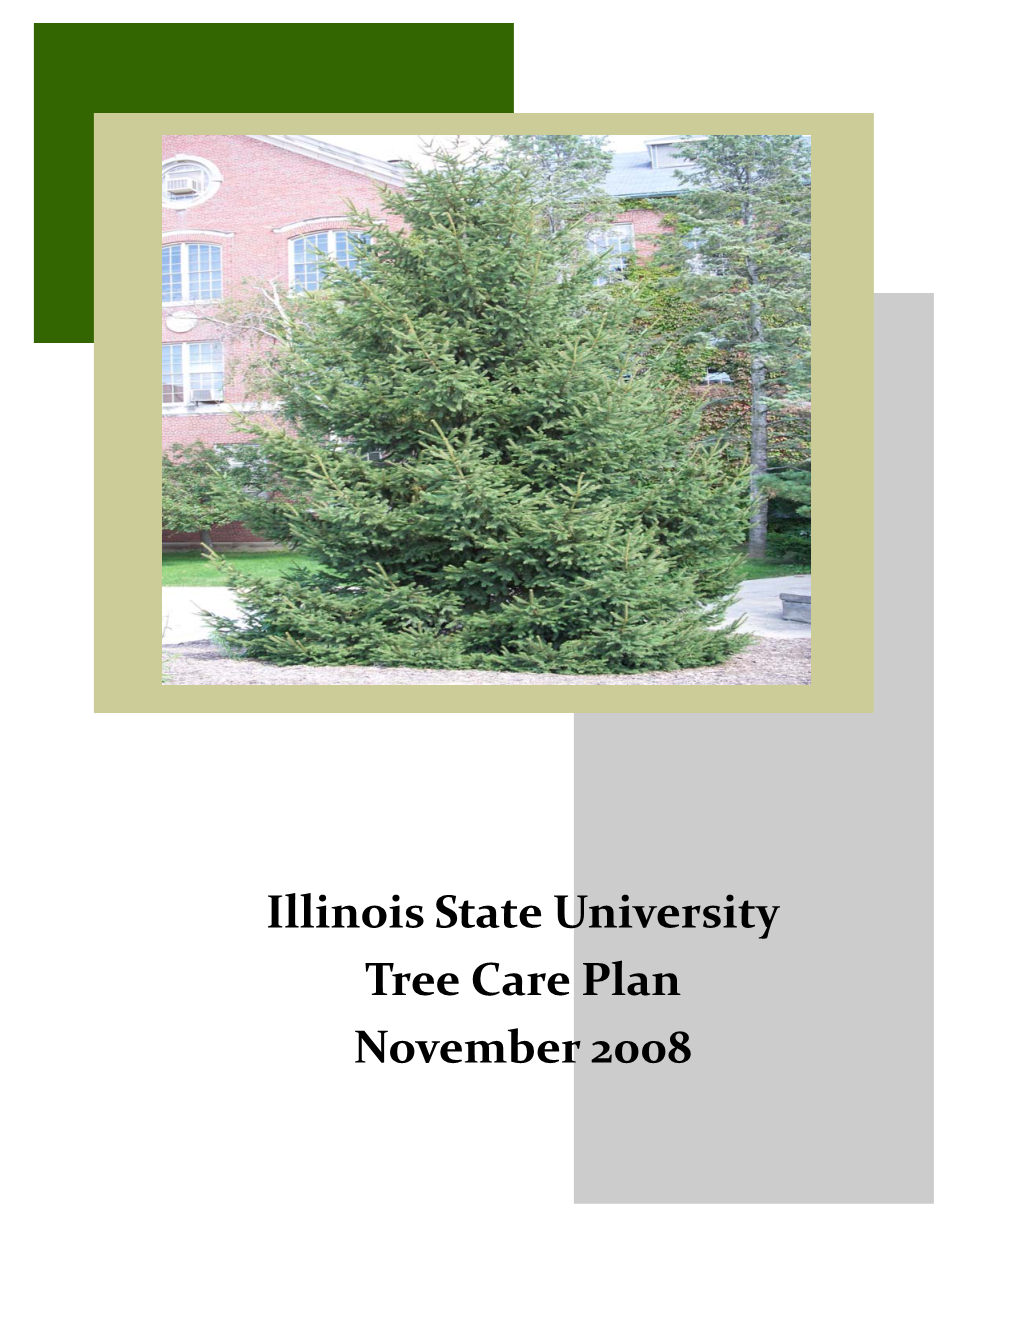 Illinois State University Tree Care Plan November 2008 II